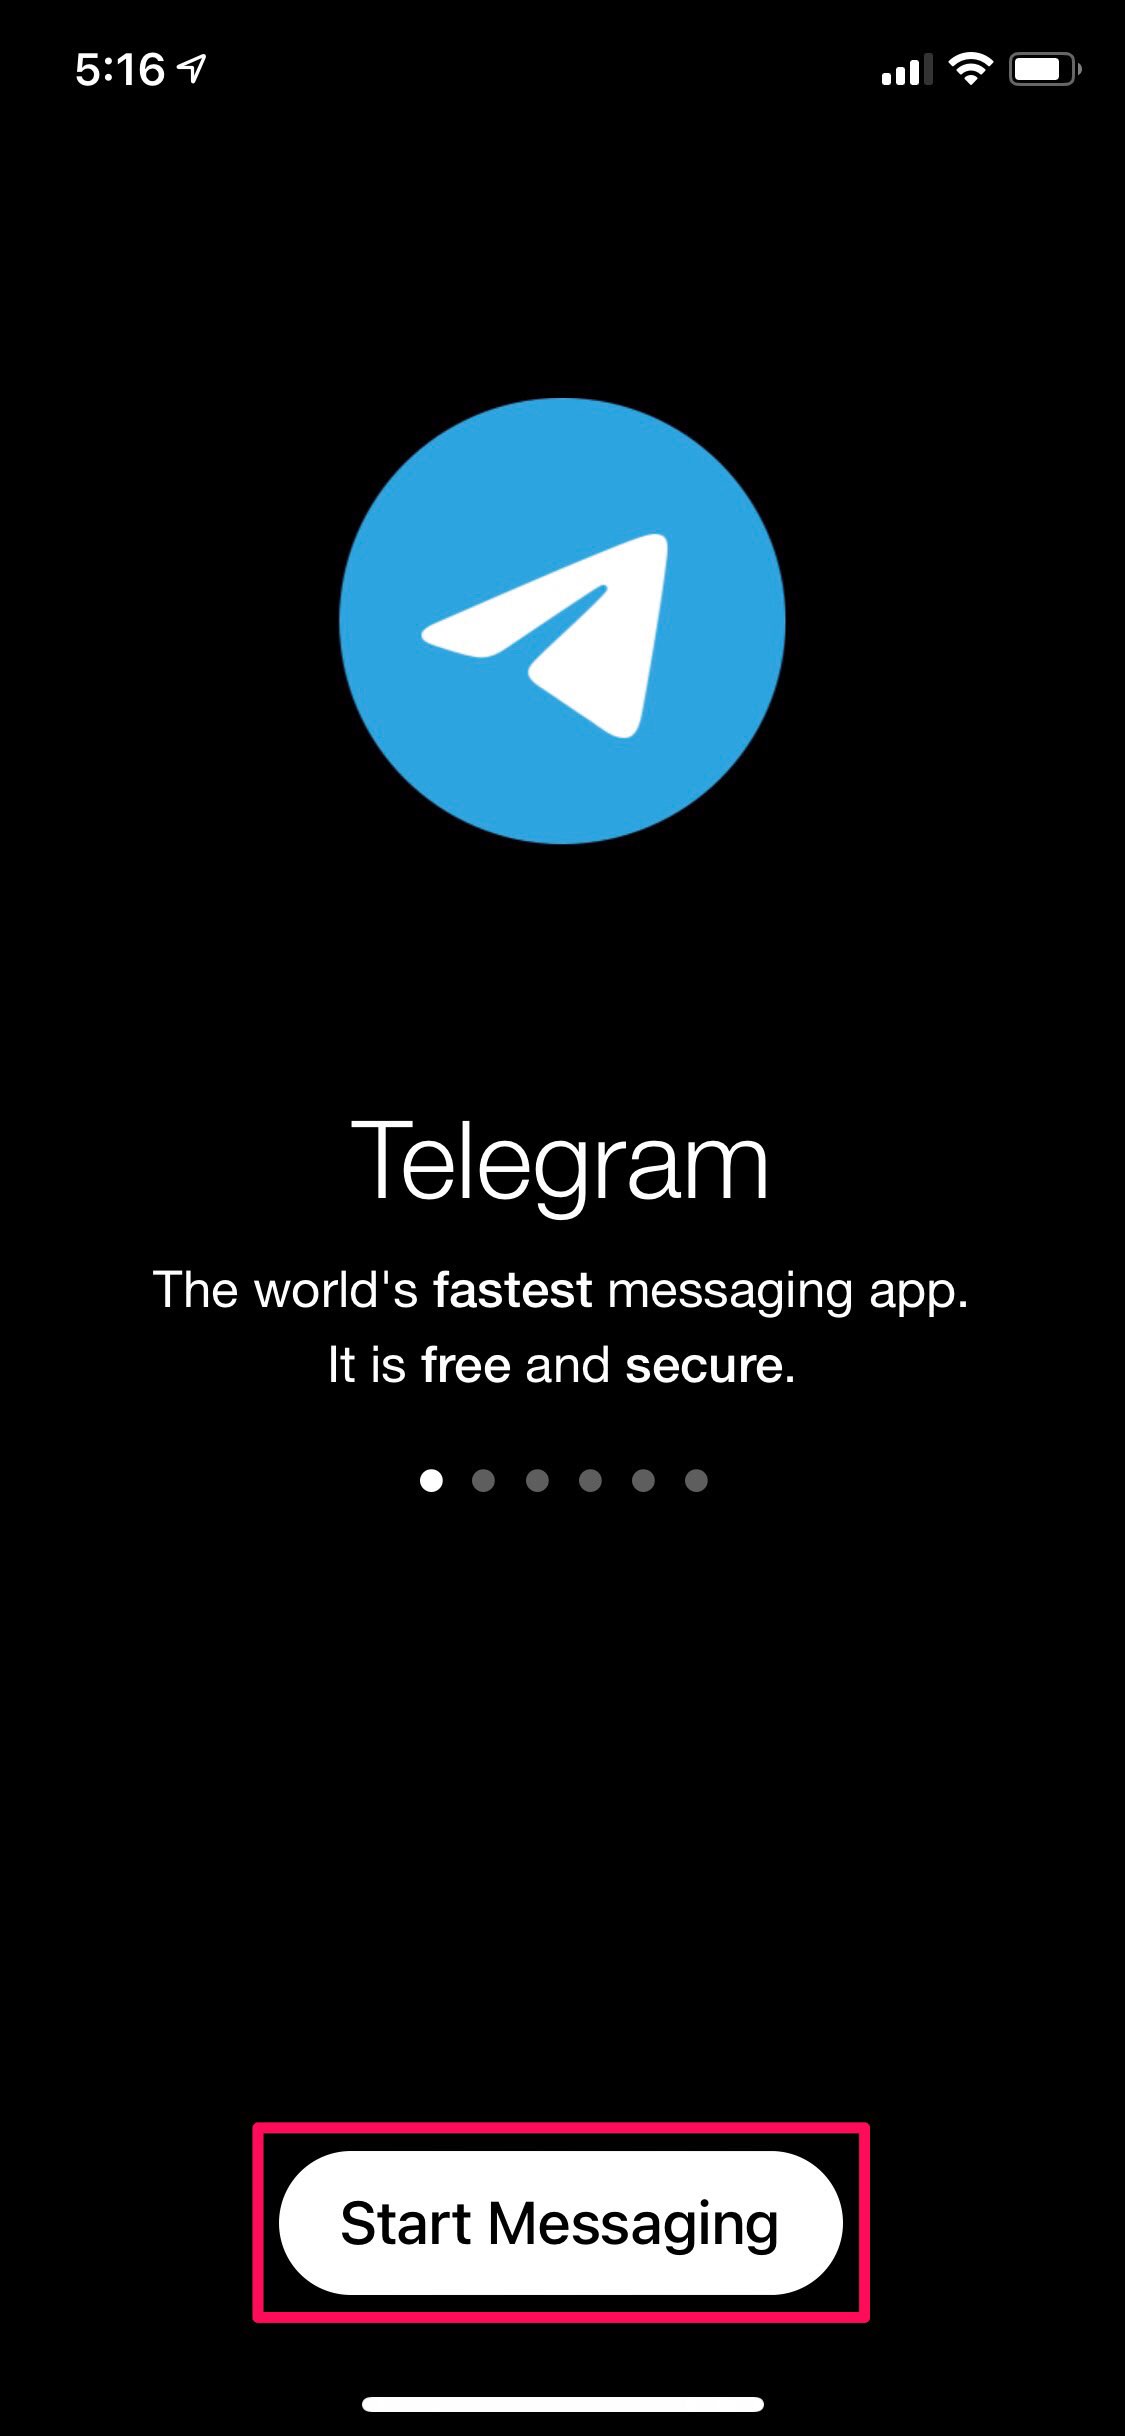 Install telegram app for android